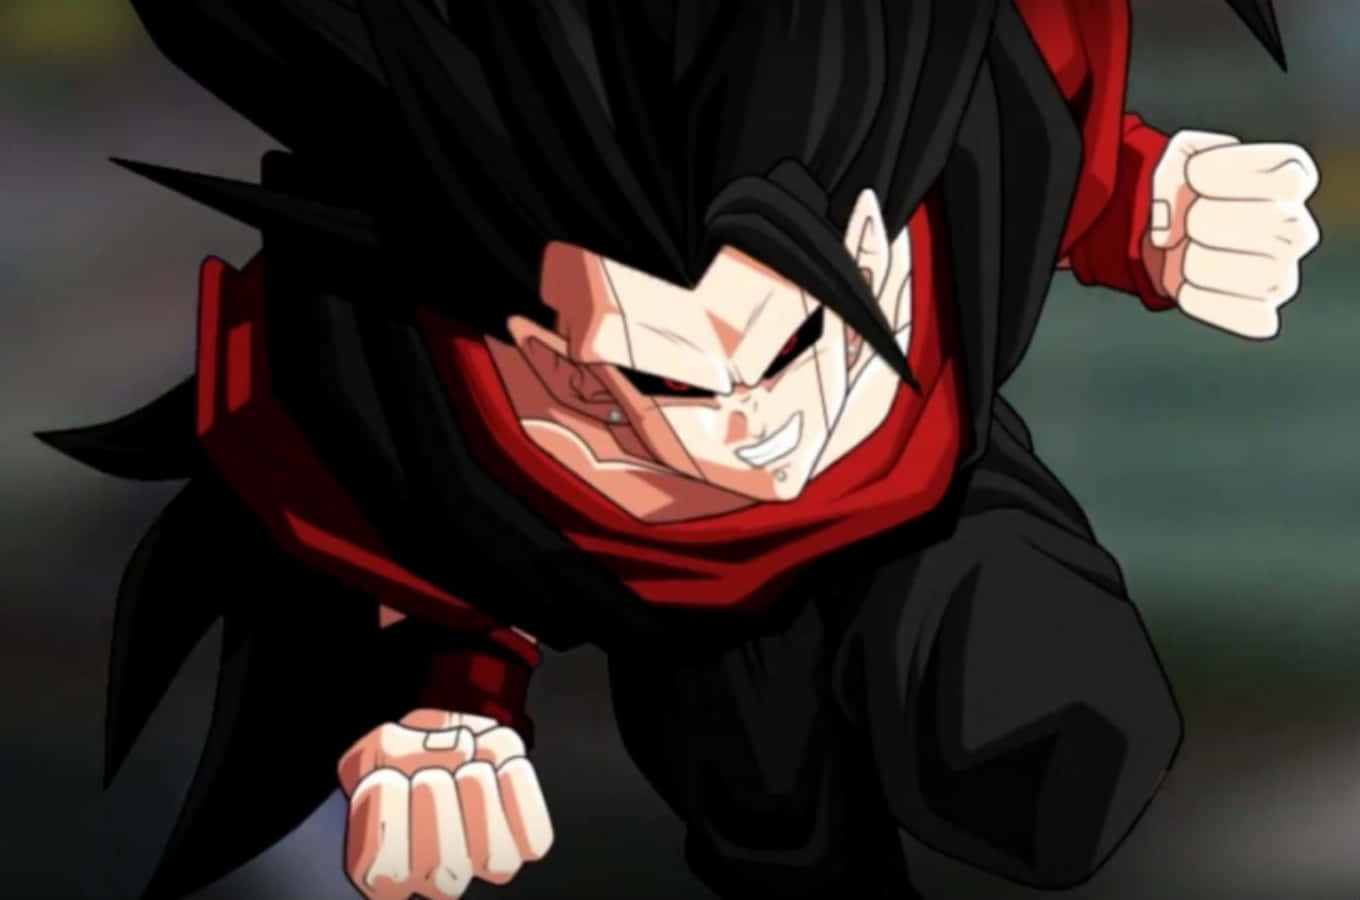 Goku Black unleashing his overwhelming power